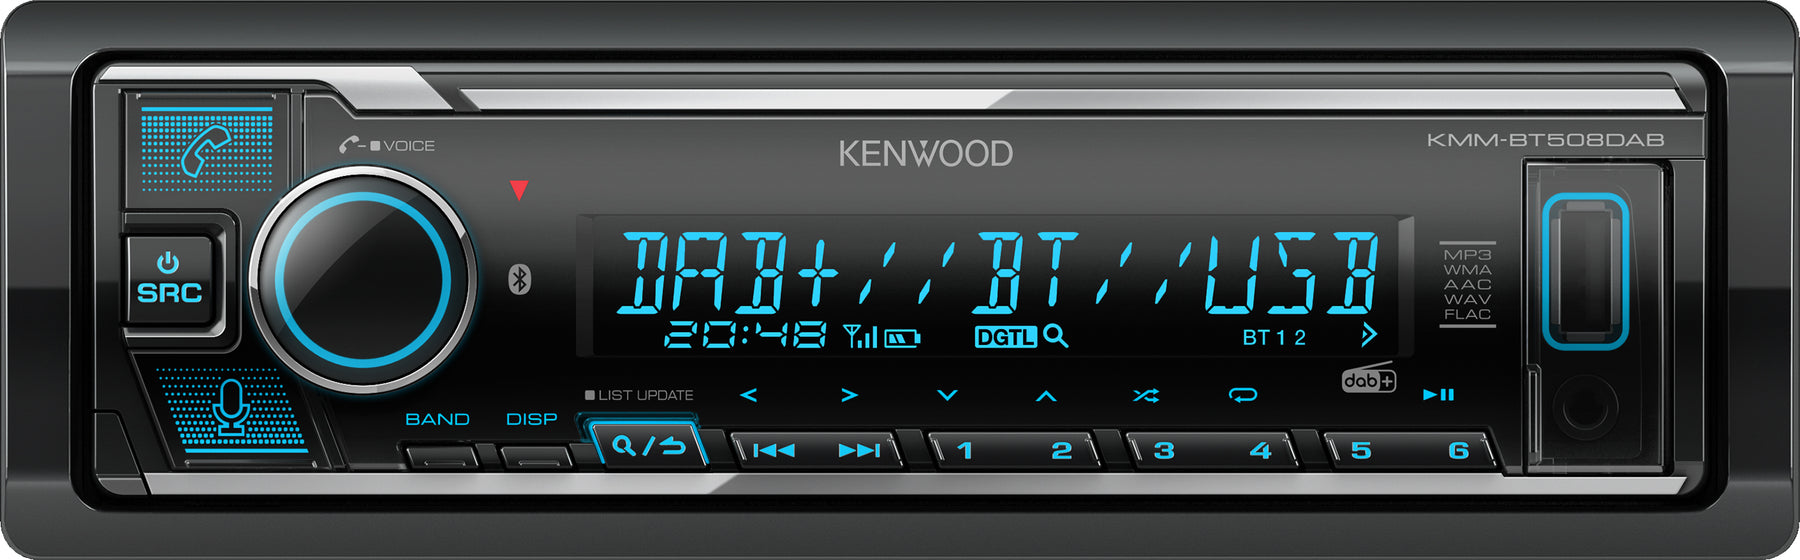 Kenwood KMM-BT508DAB. Digital Media Receiver CON Digital radio DAB+, Bluetooth e compatibilità con Amazon Alexa